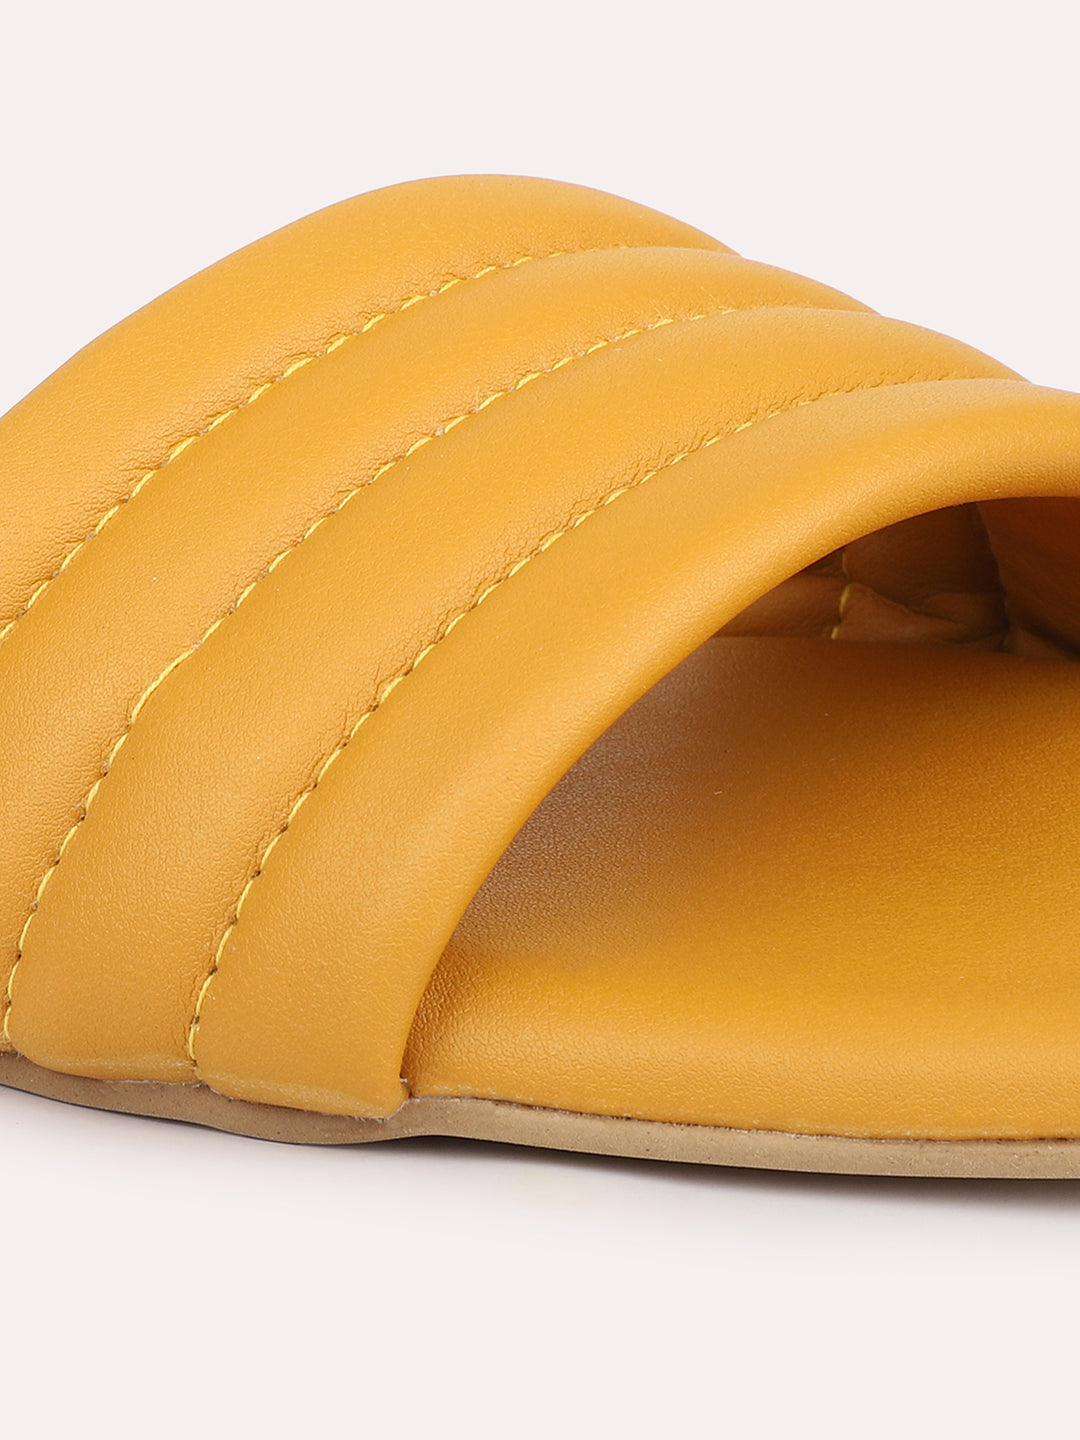 Women Yellow Striped Open Toe Flats